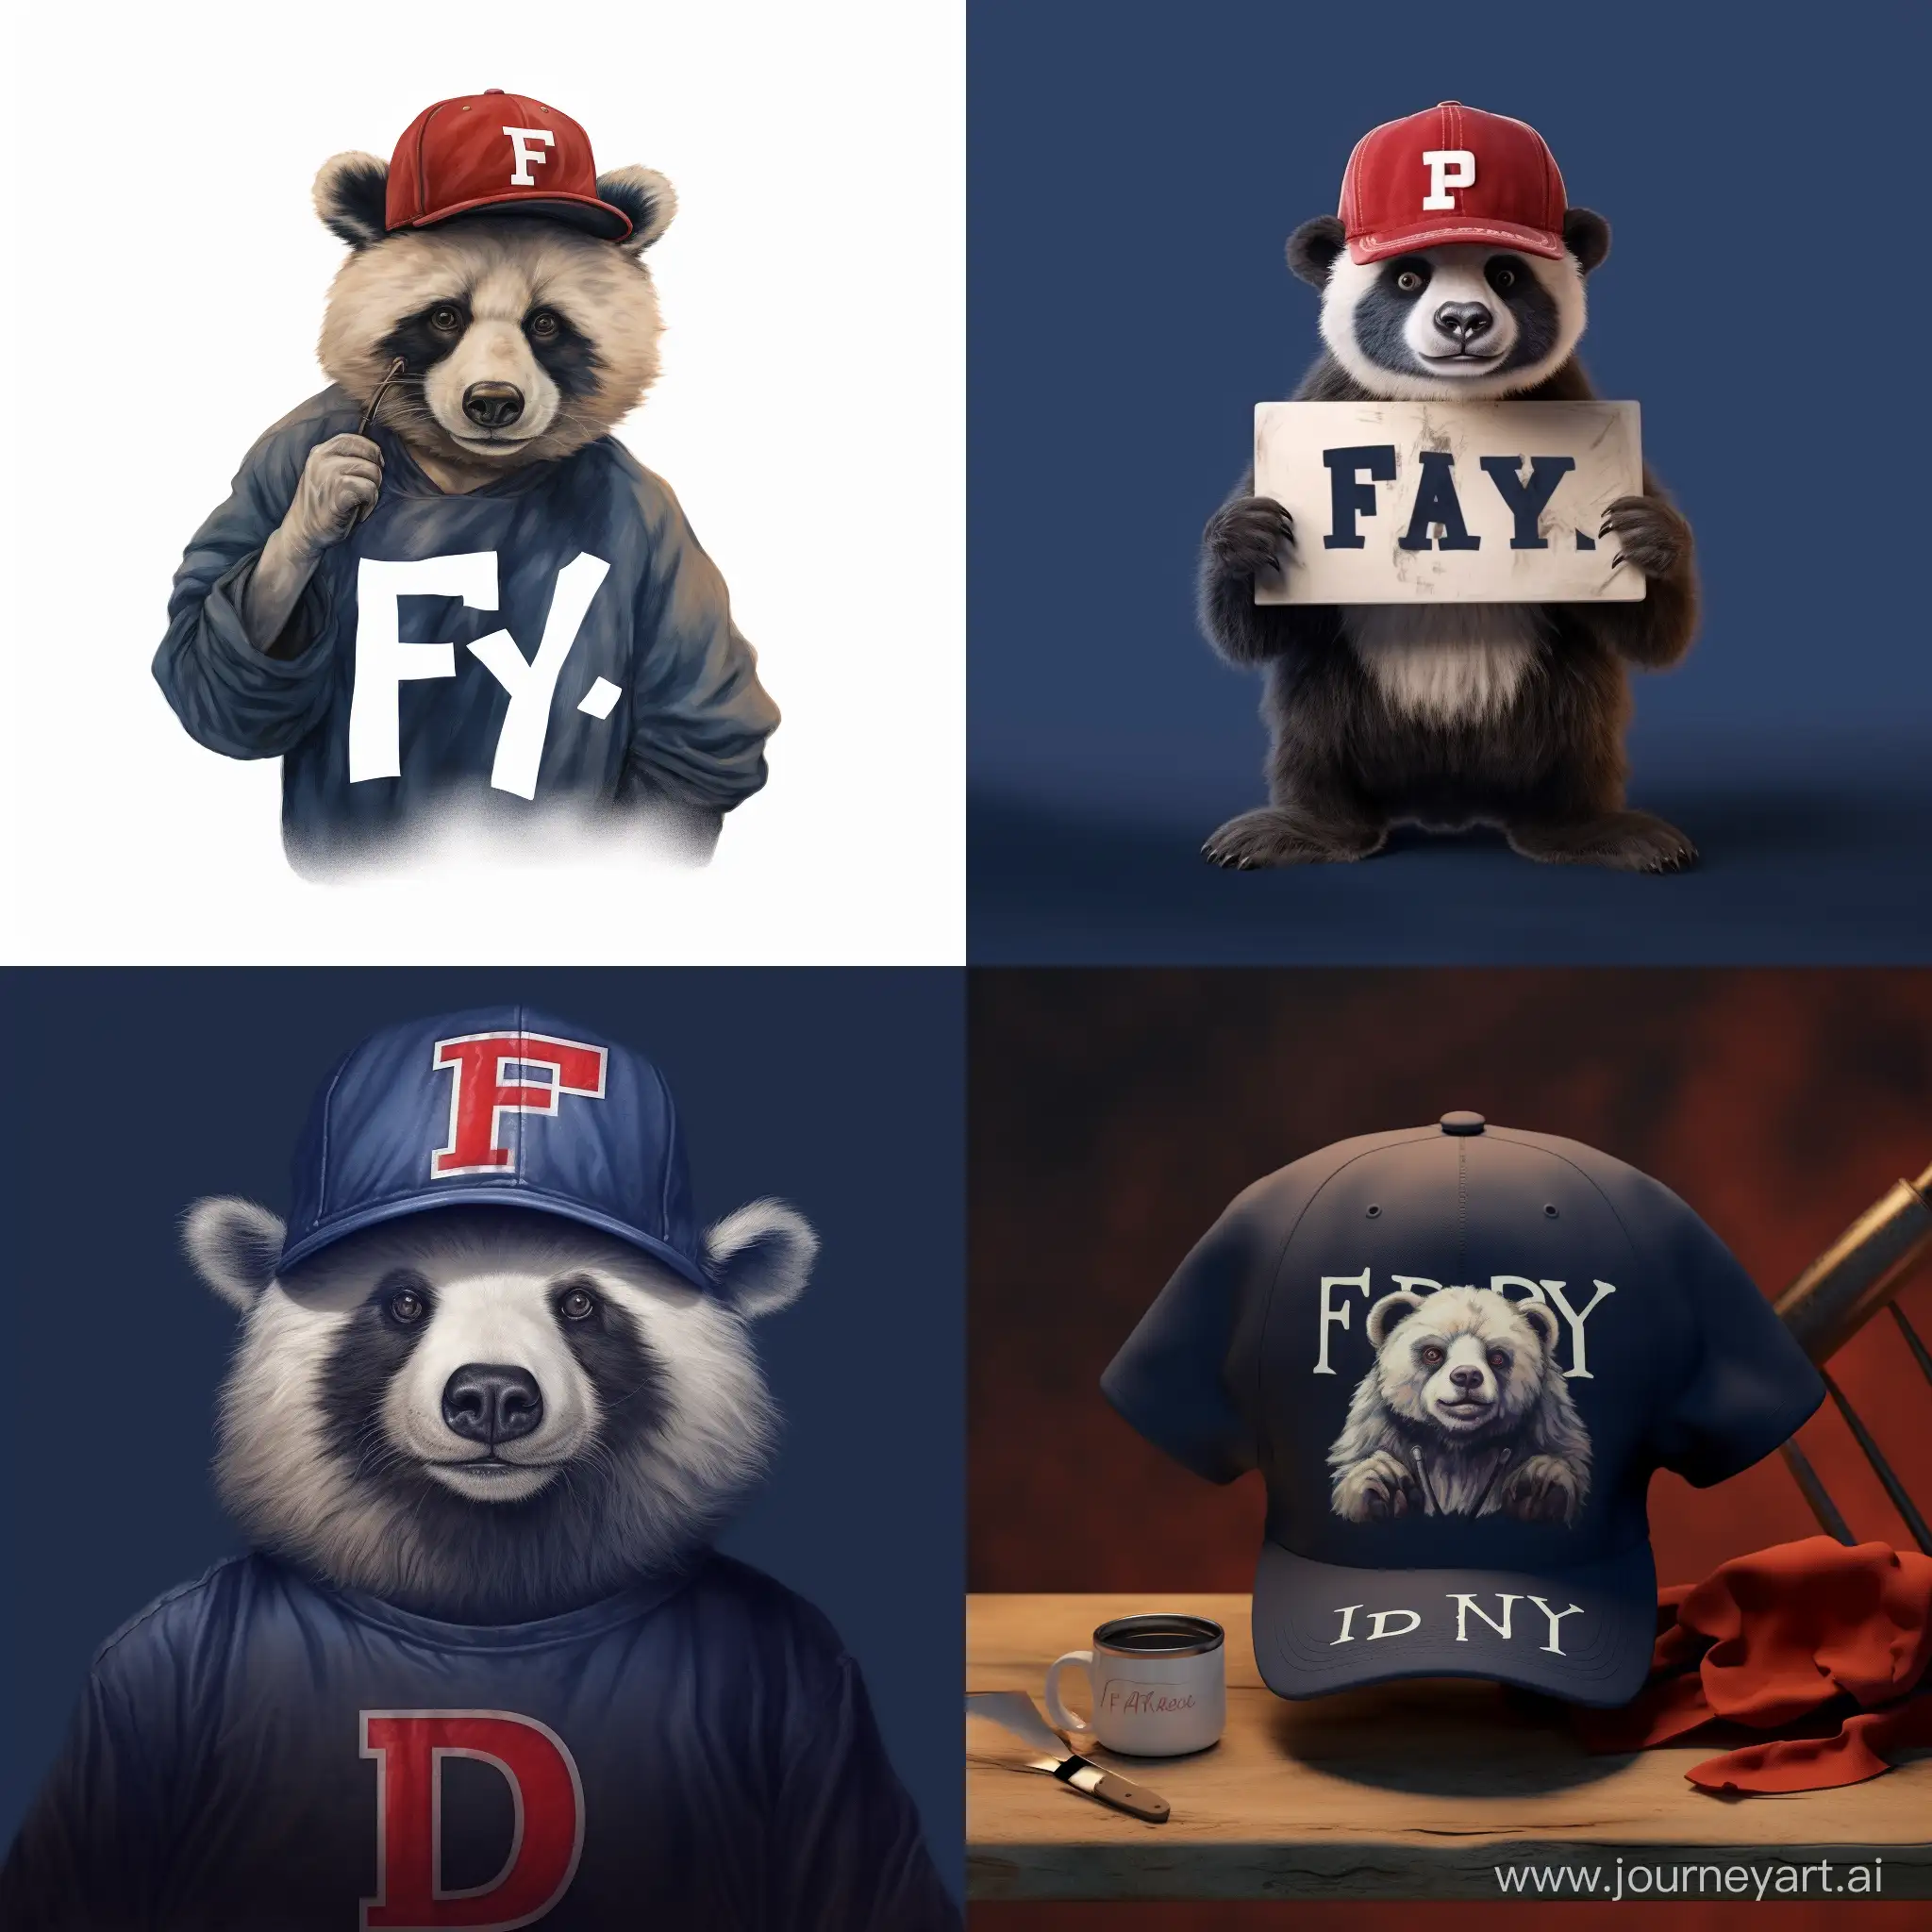 Adorable-Panda-Wearing-Baseball-Cap-Holds-FYDI-Sign-in-Photorealistic-Scene